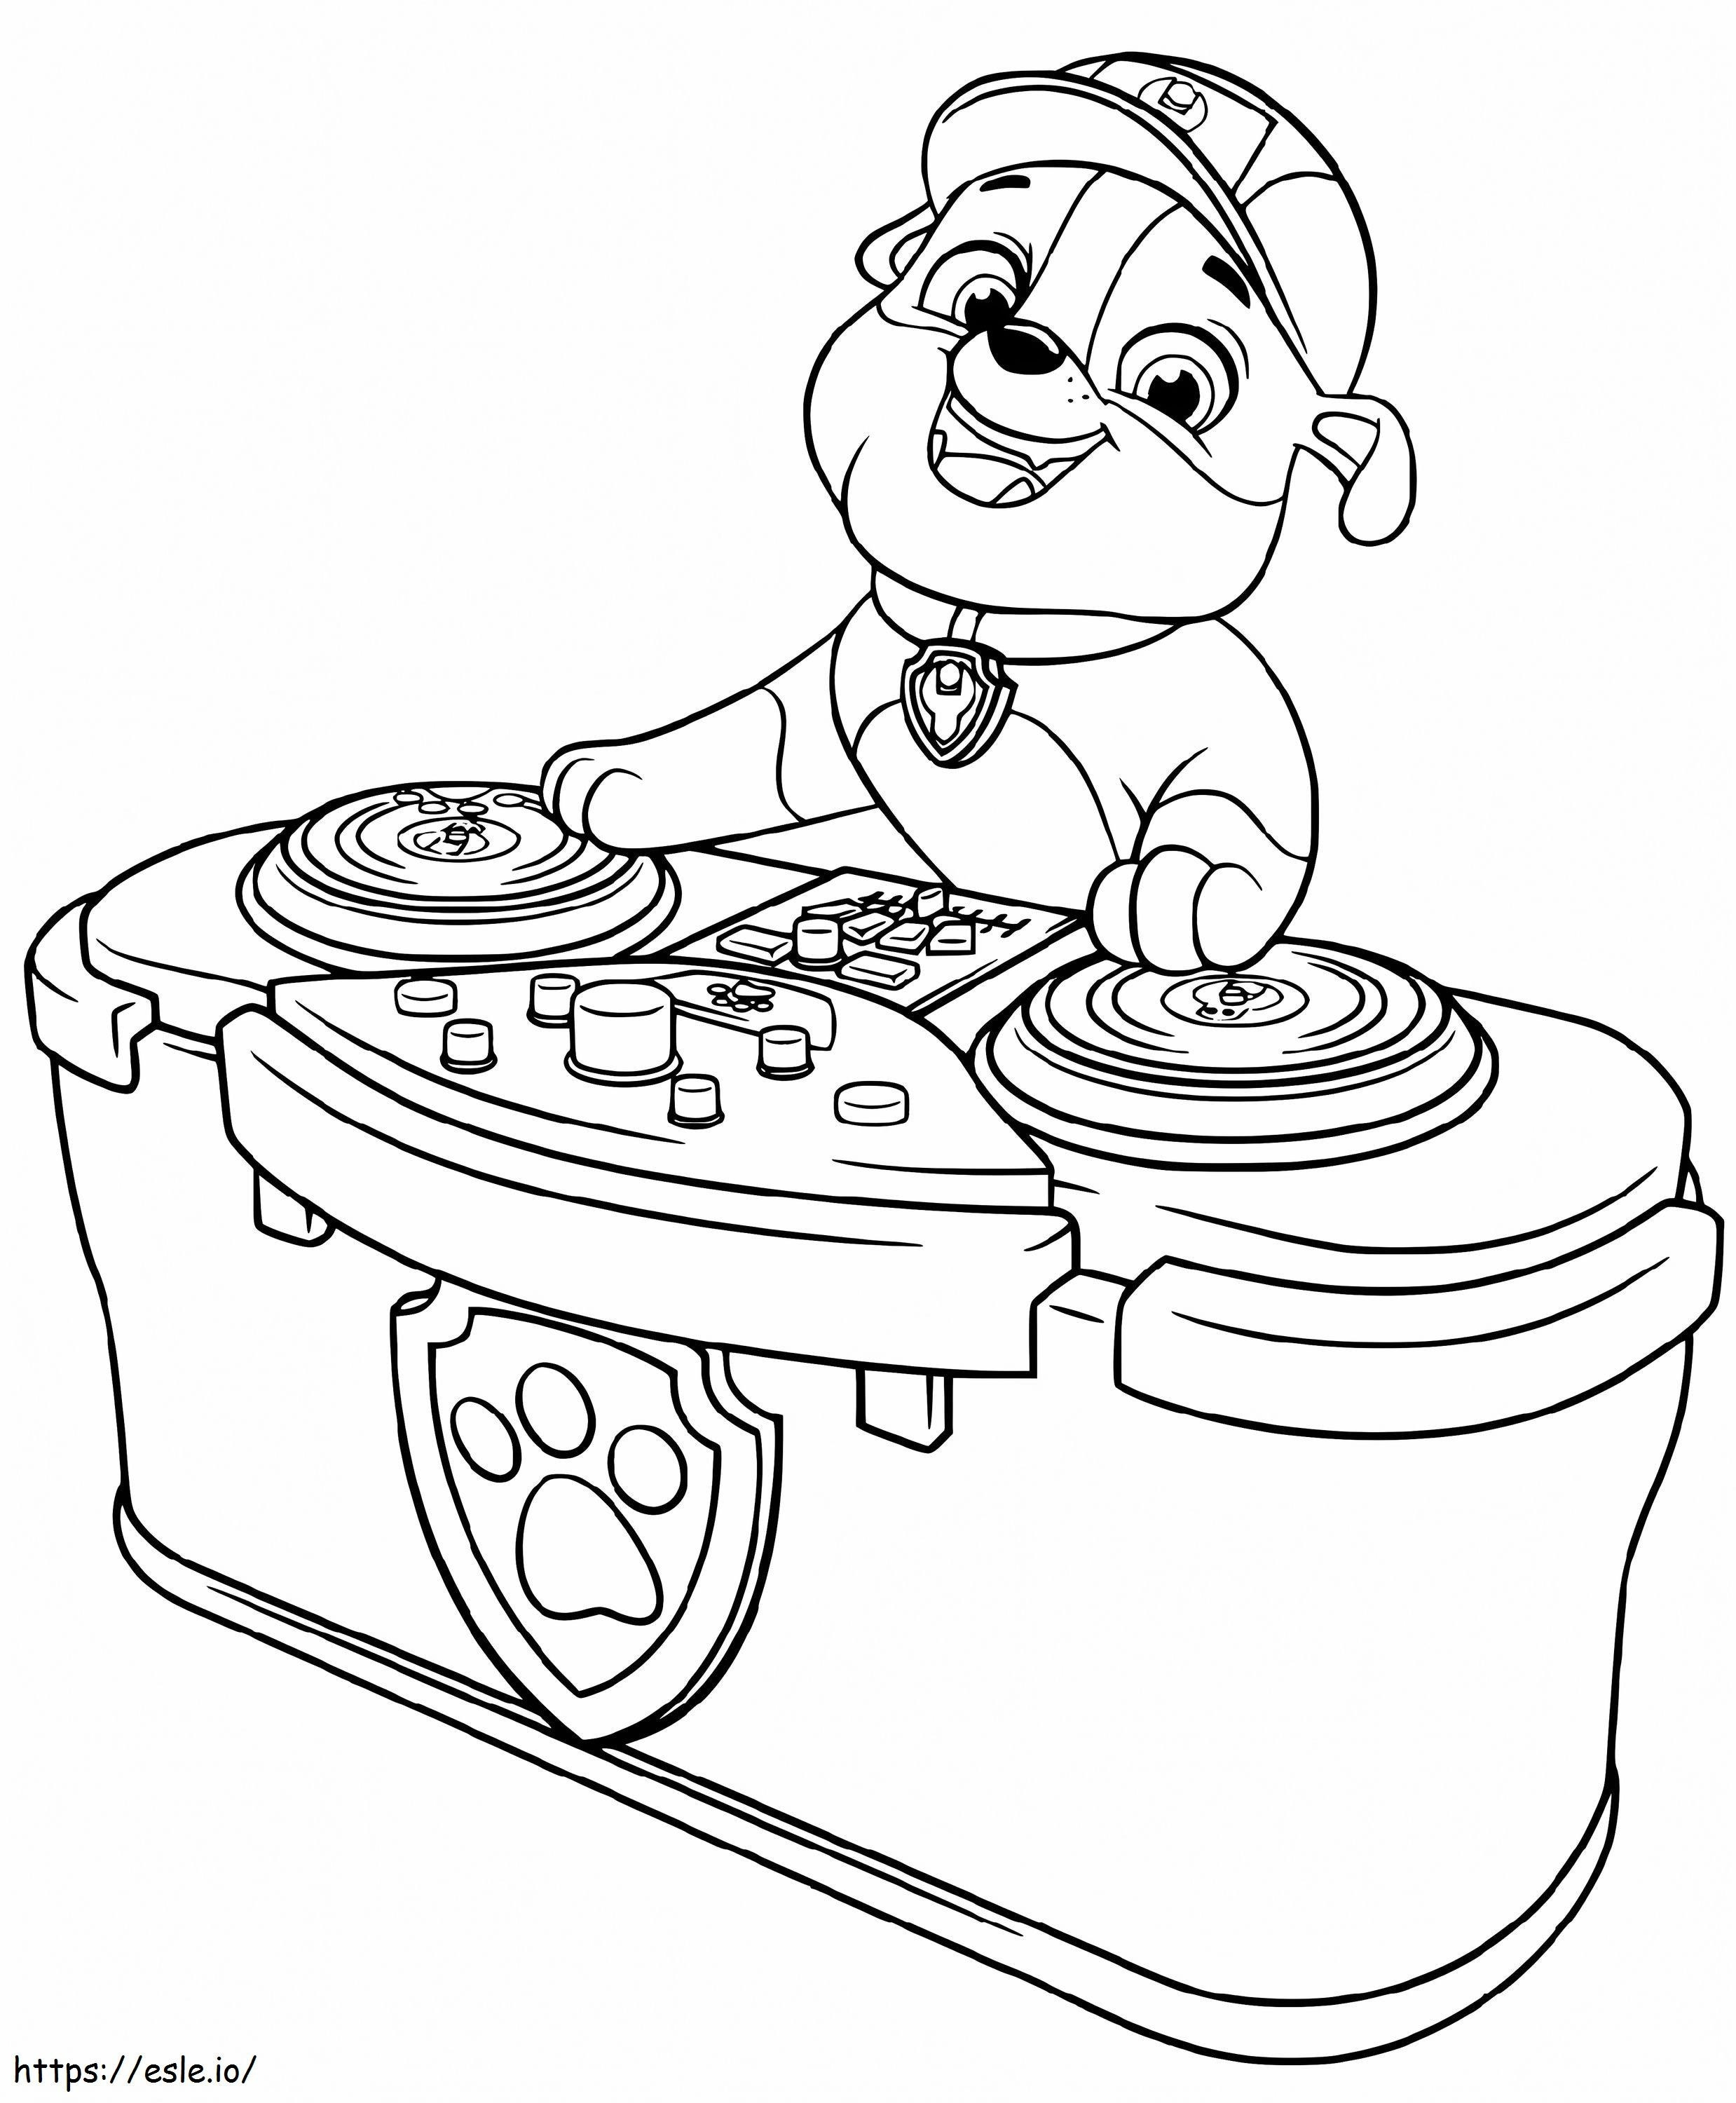 DJ Rubble coloring page